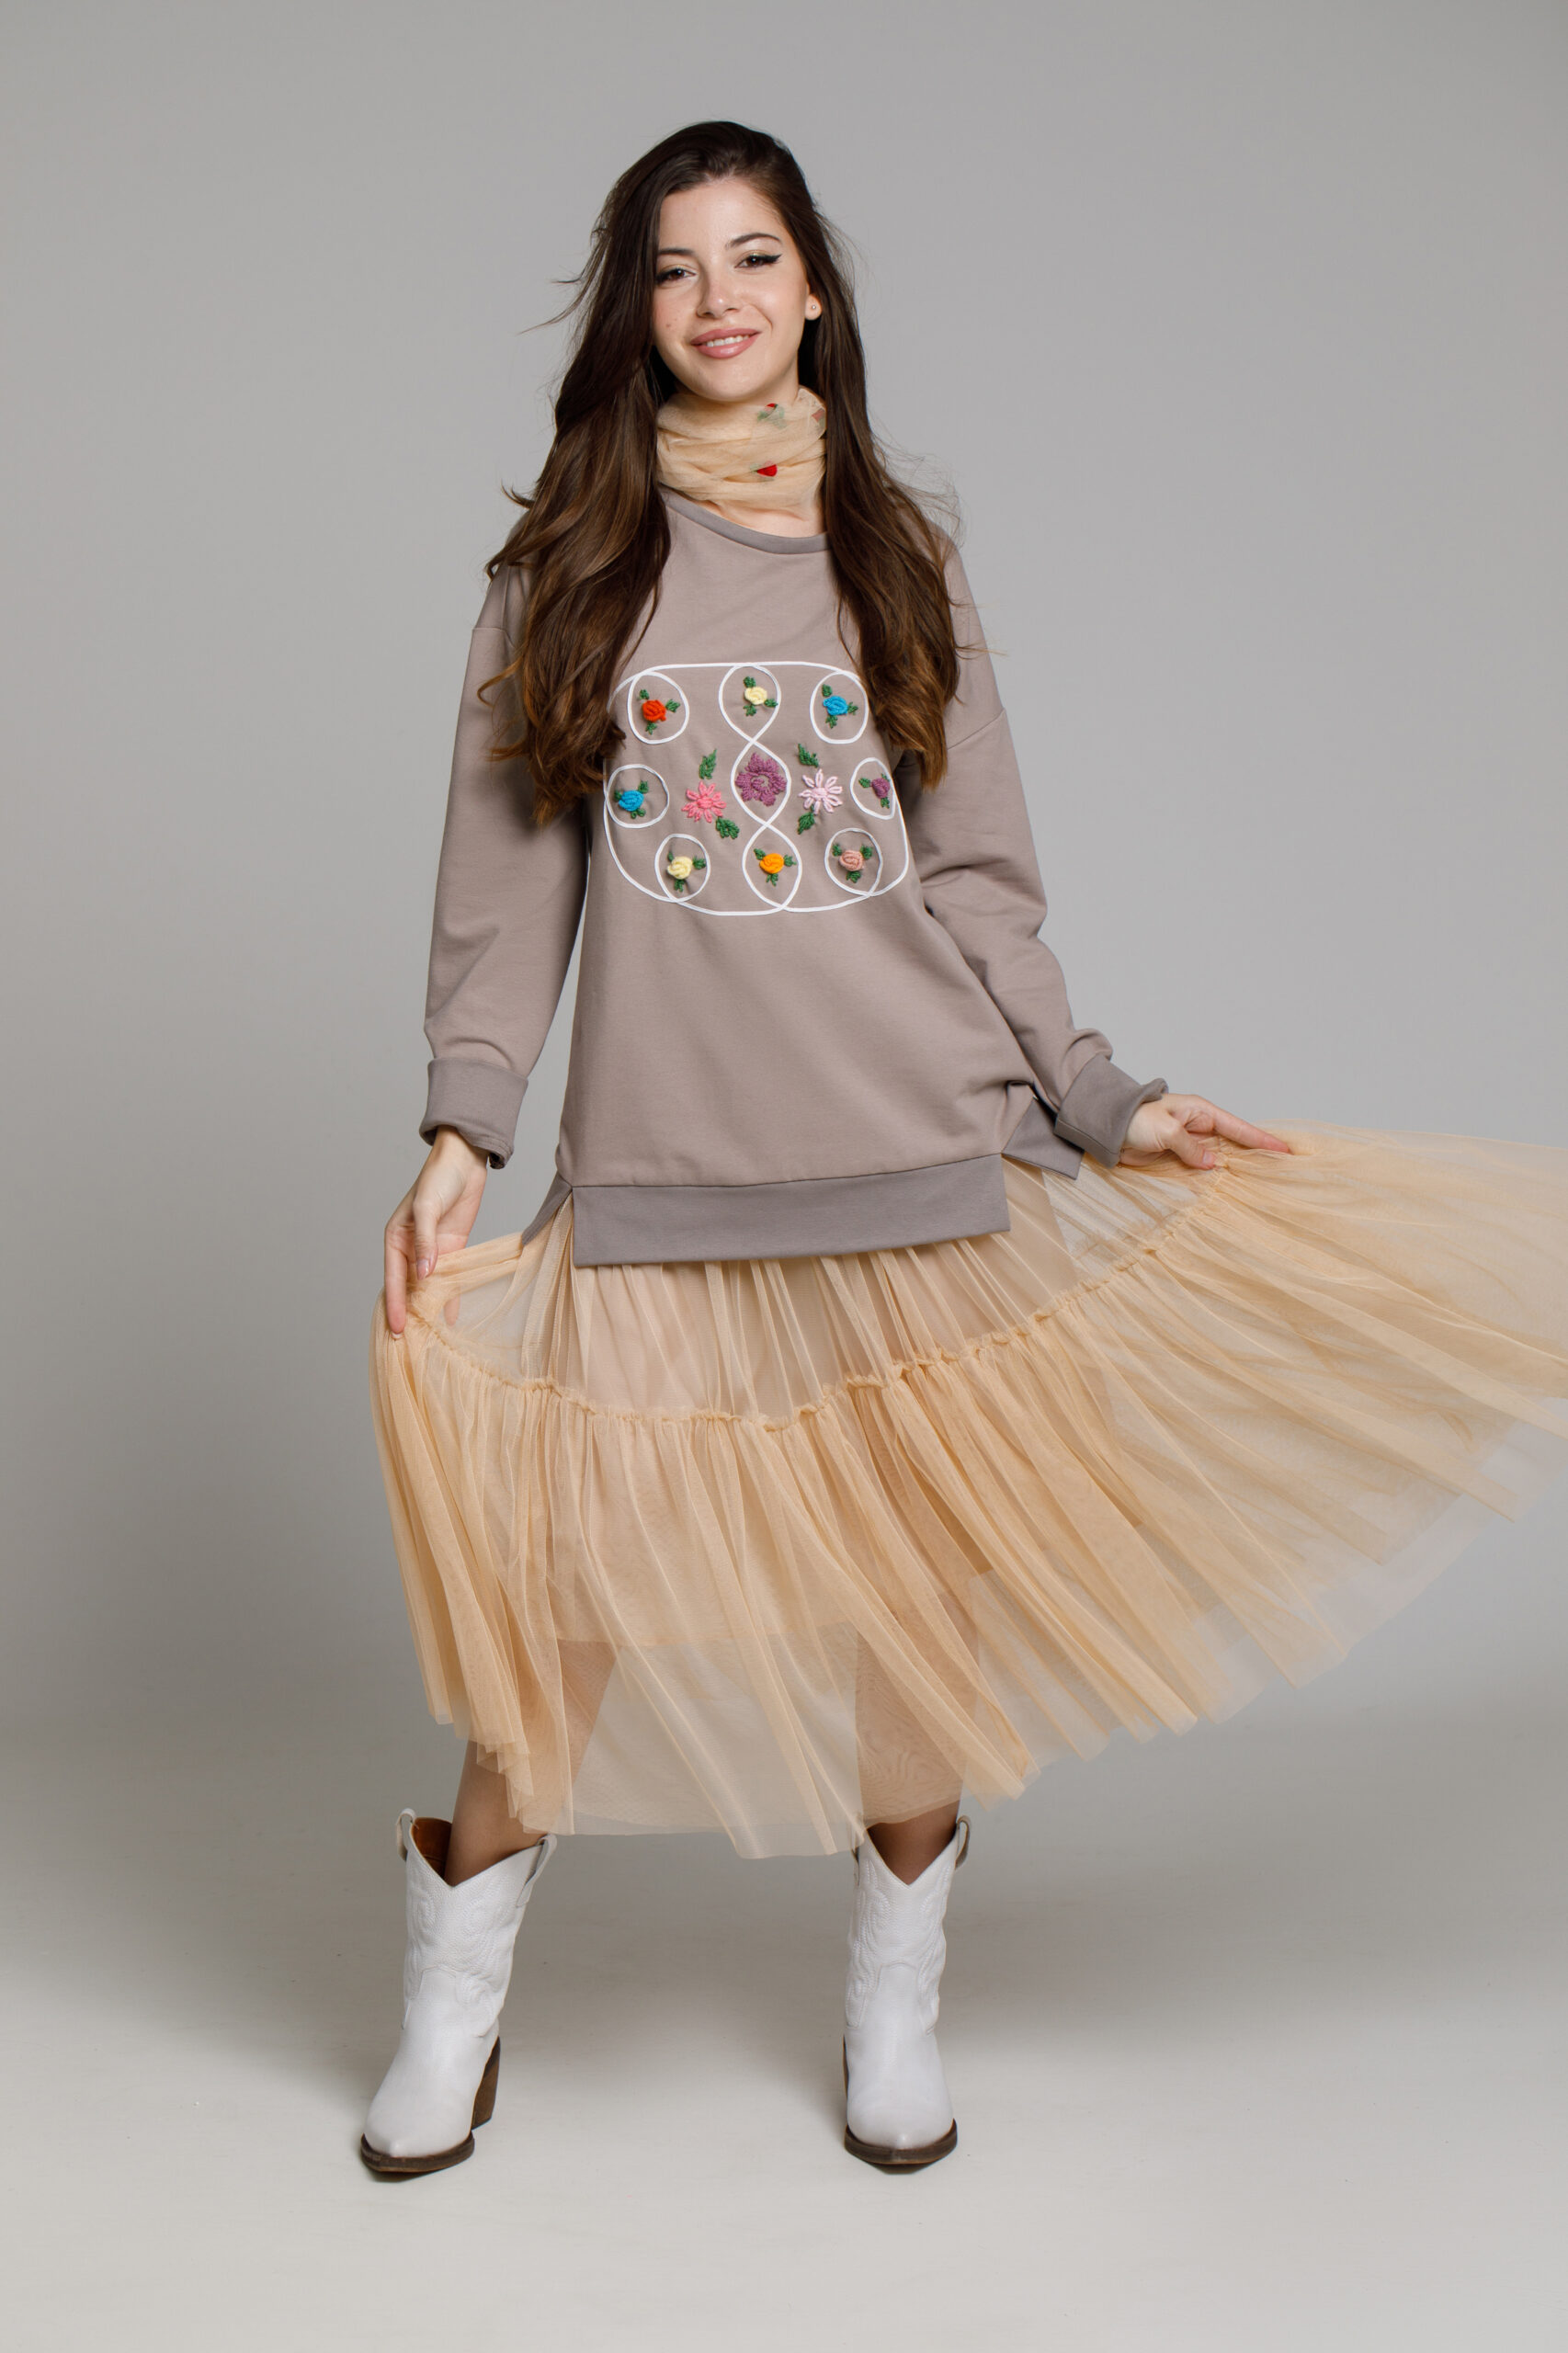 FREIRA cream tulle skirt. Natural fabrics, original design, handmade embroidery